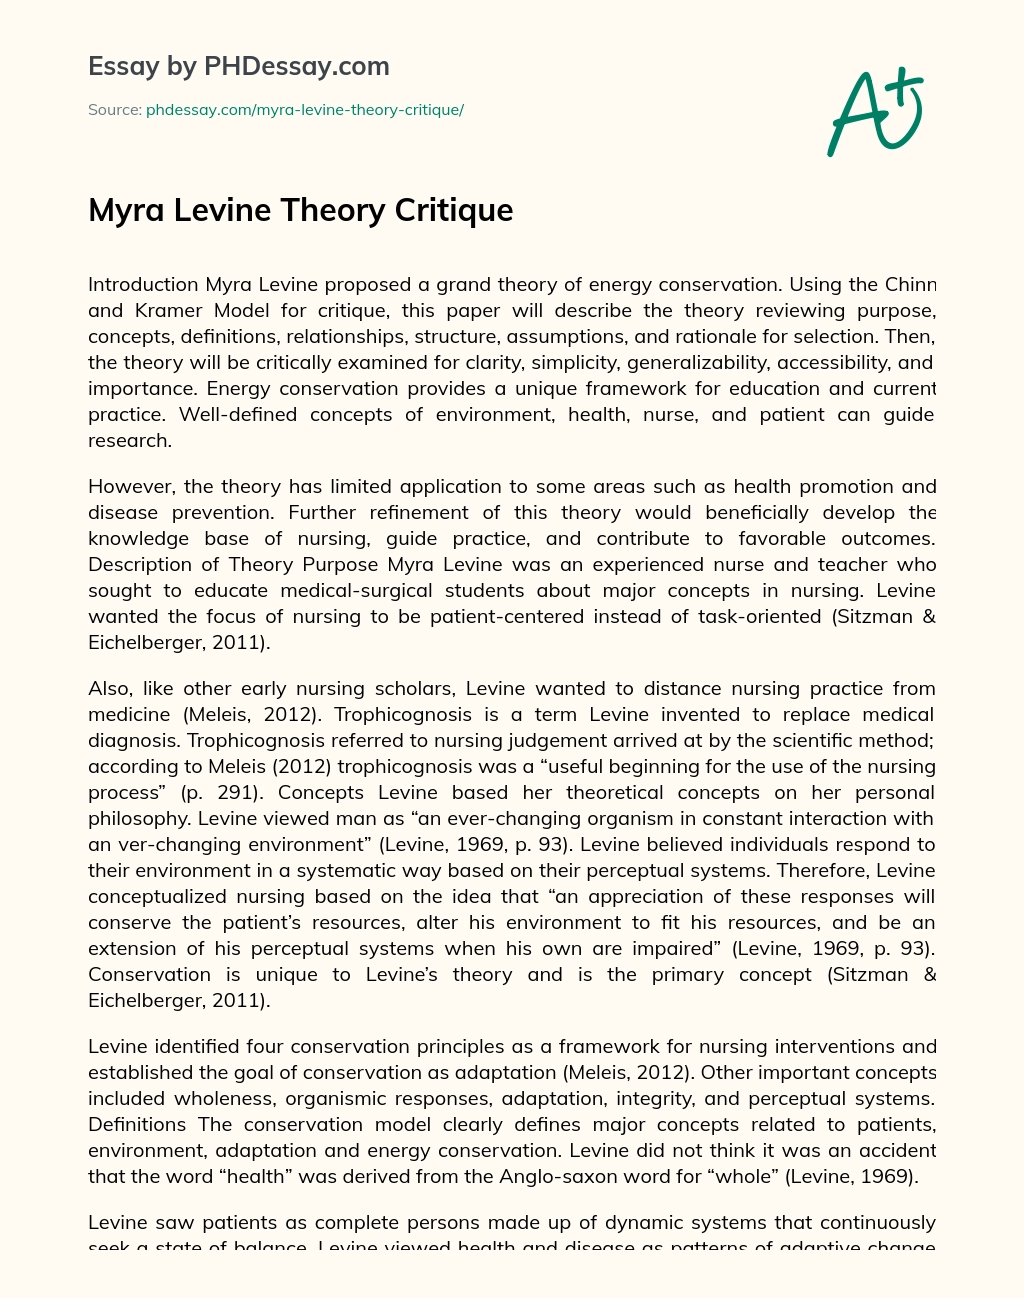 Myra Levine Theory Critique essay